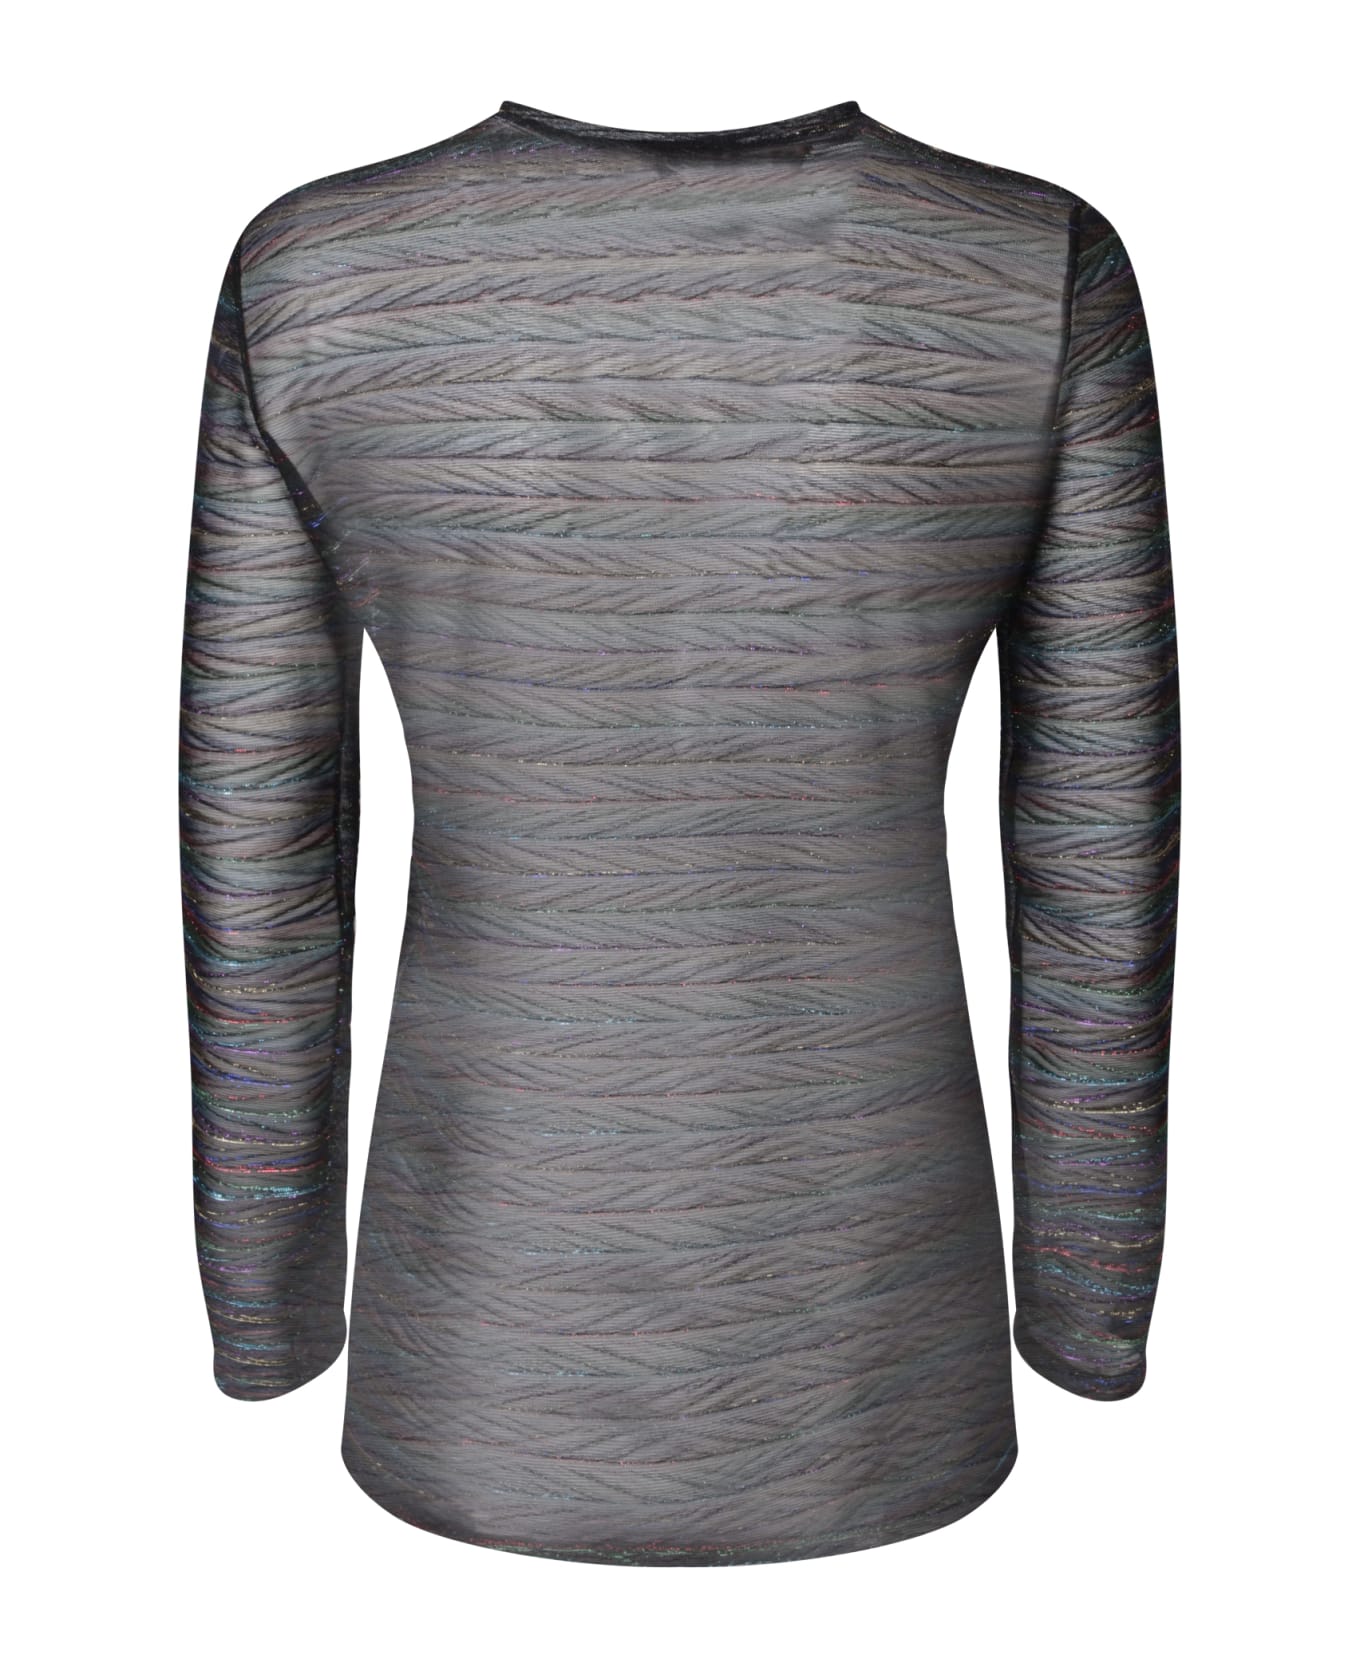 Alessandro Enriquez Striped Metallic Black/multicolor Shirt - Black ニットウェア